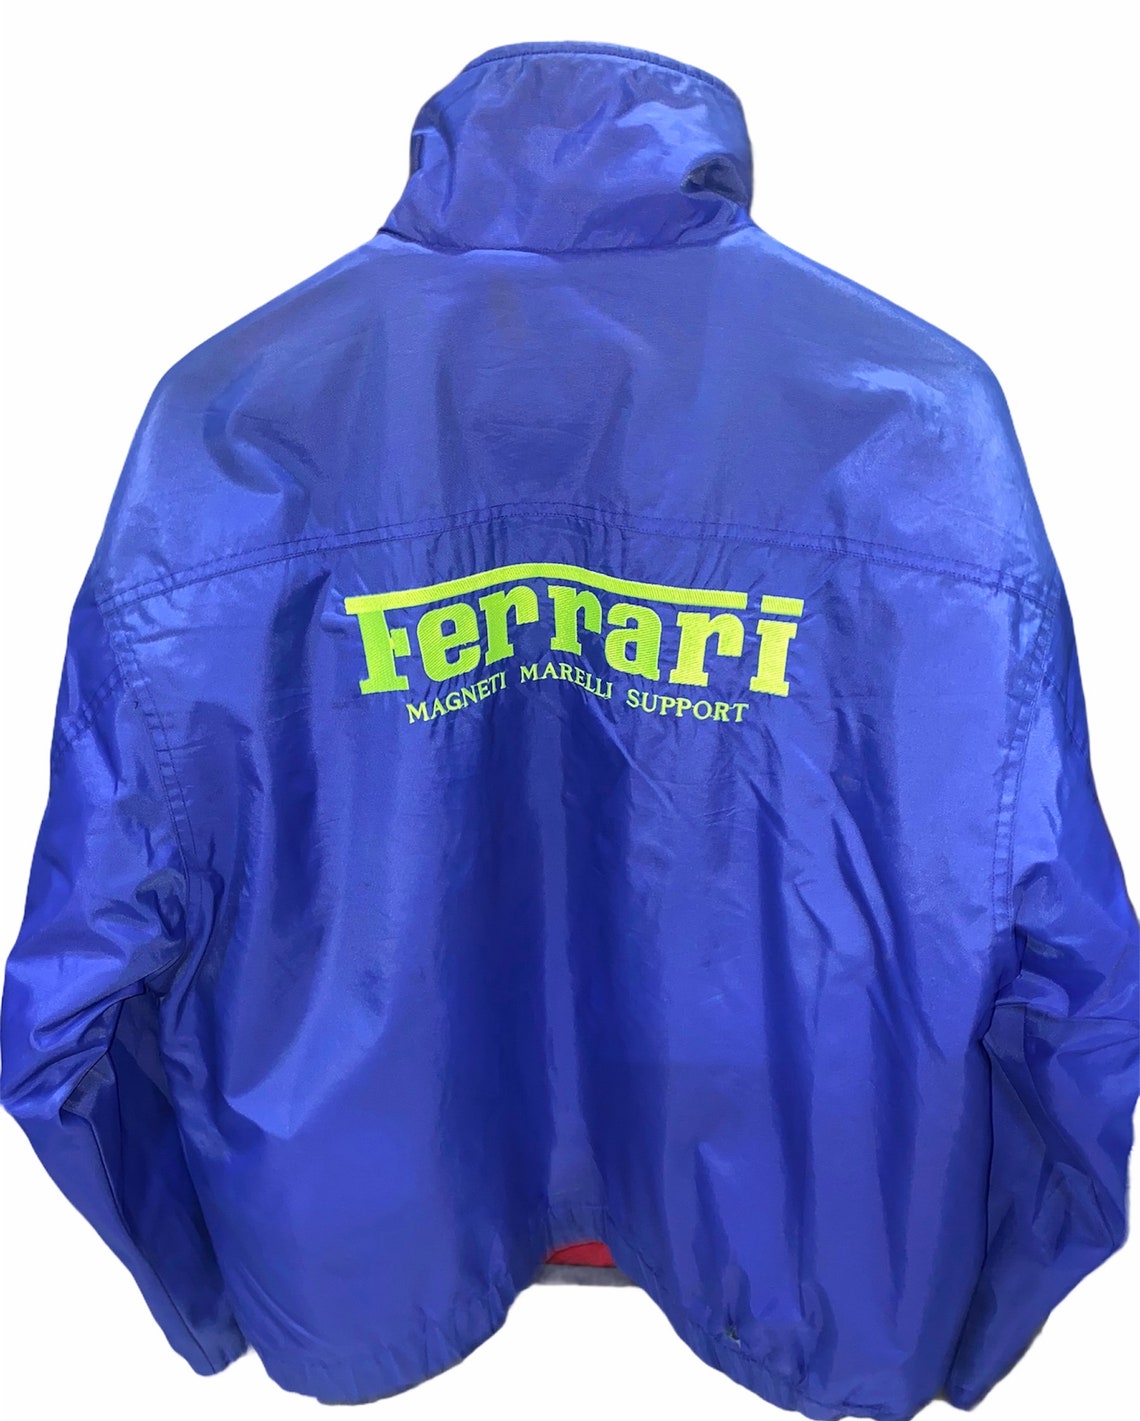 Very rare vintage jacket ferrari magneti marelli support | Etsy